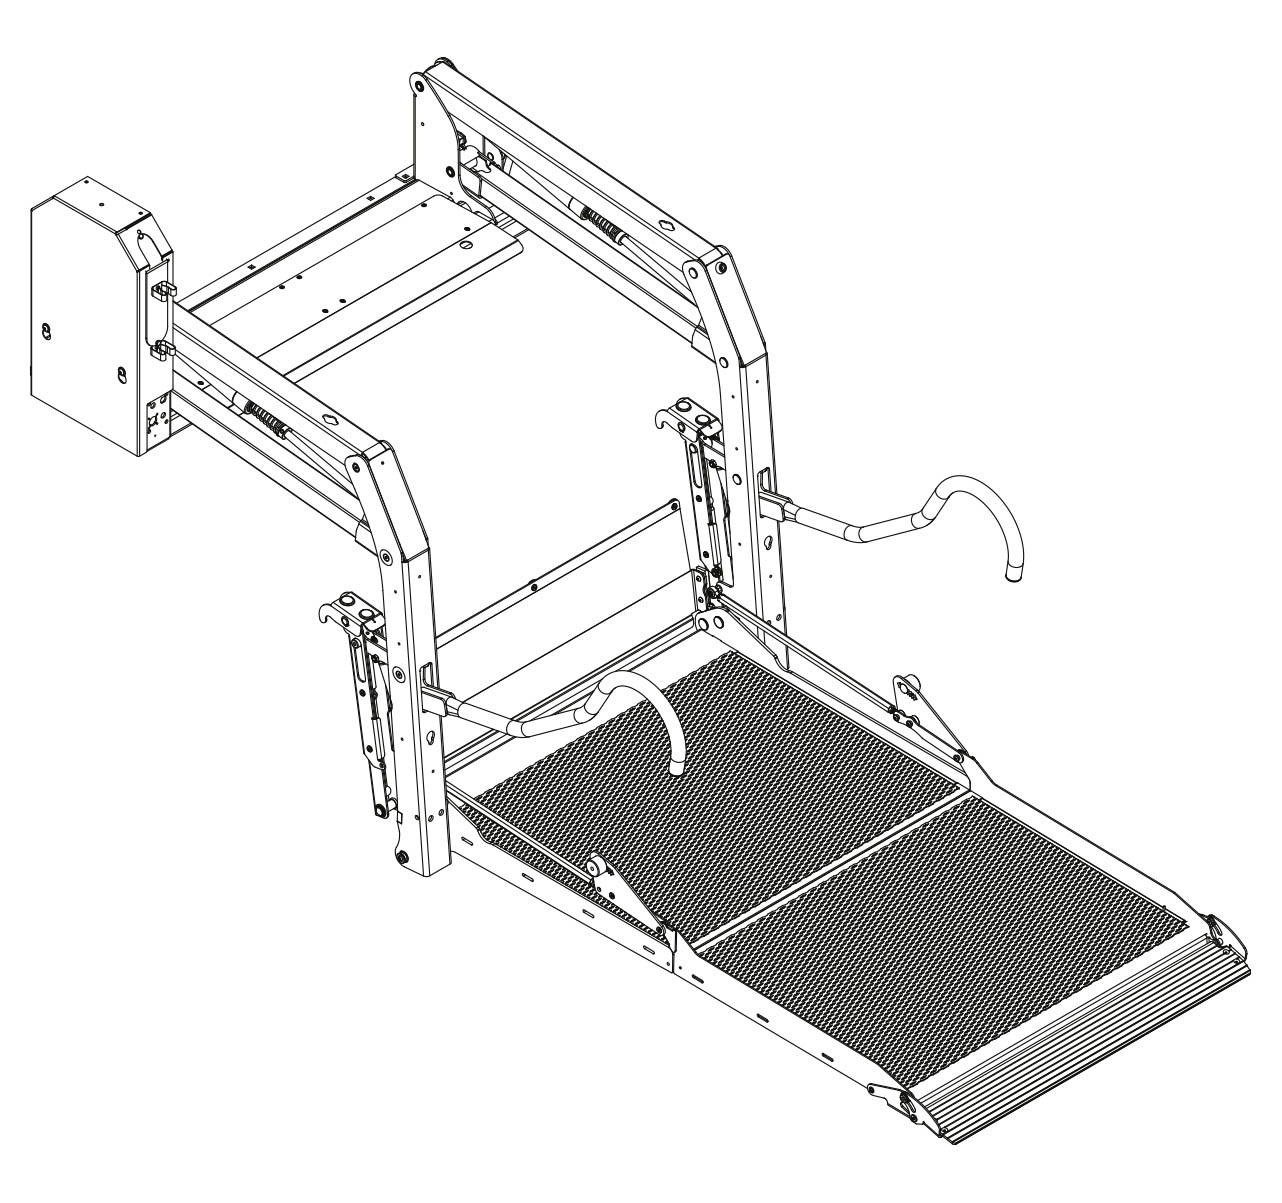 Illustration of an E-1500 folding lift